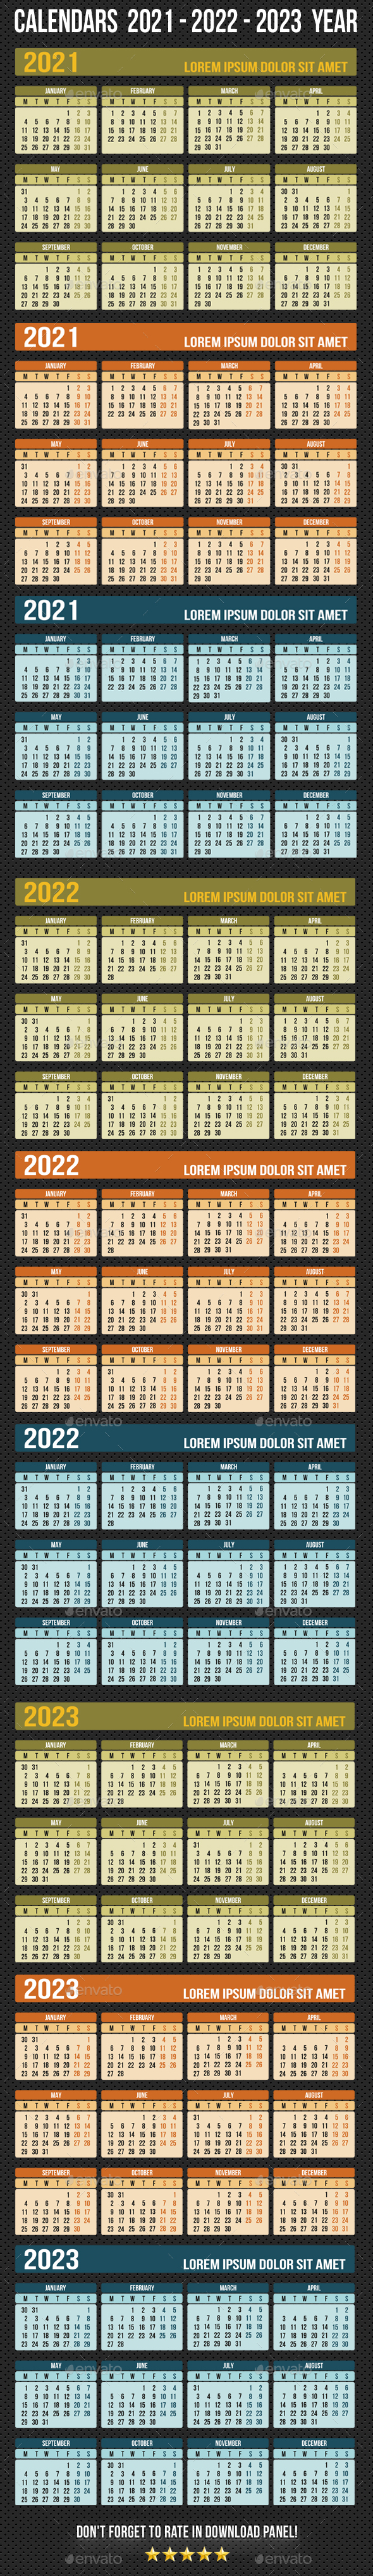 Calendars  2021 - 2022 - 2023 Year